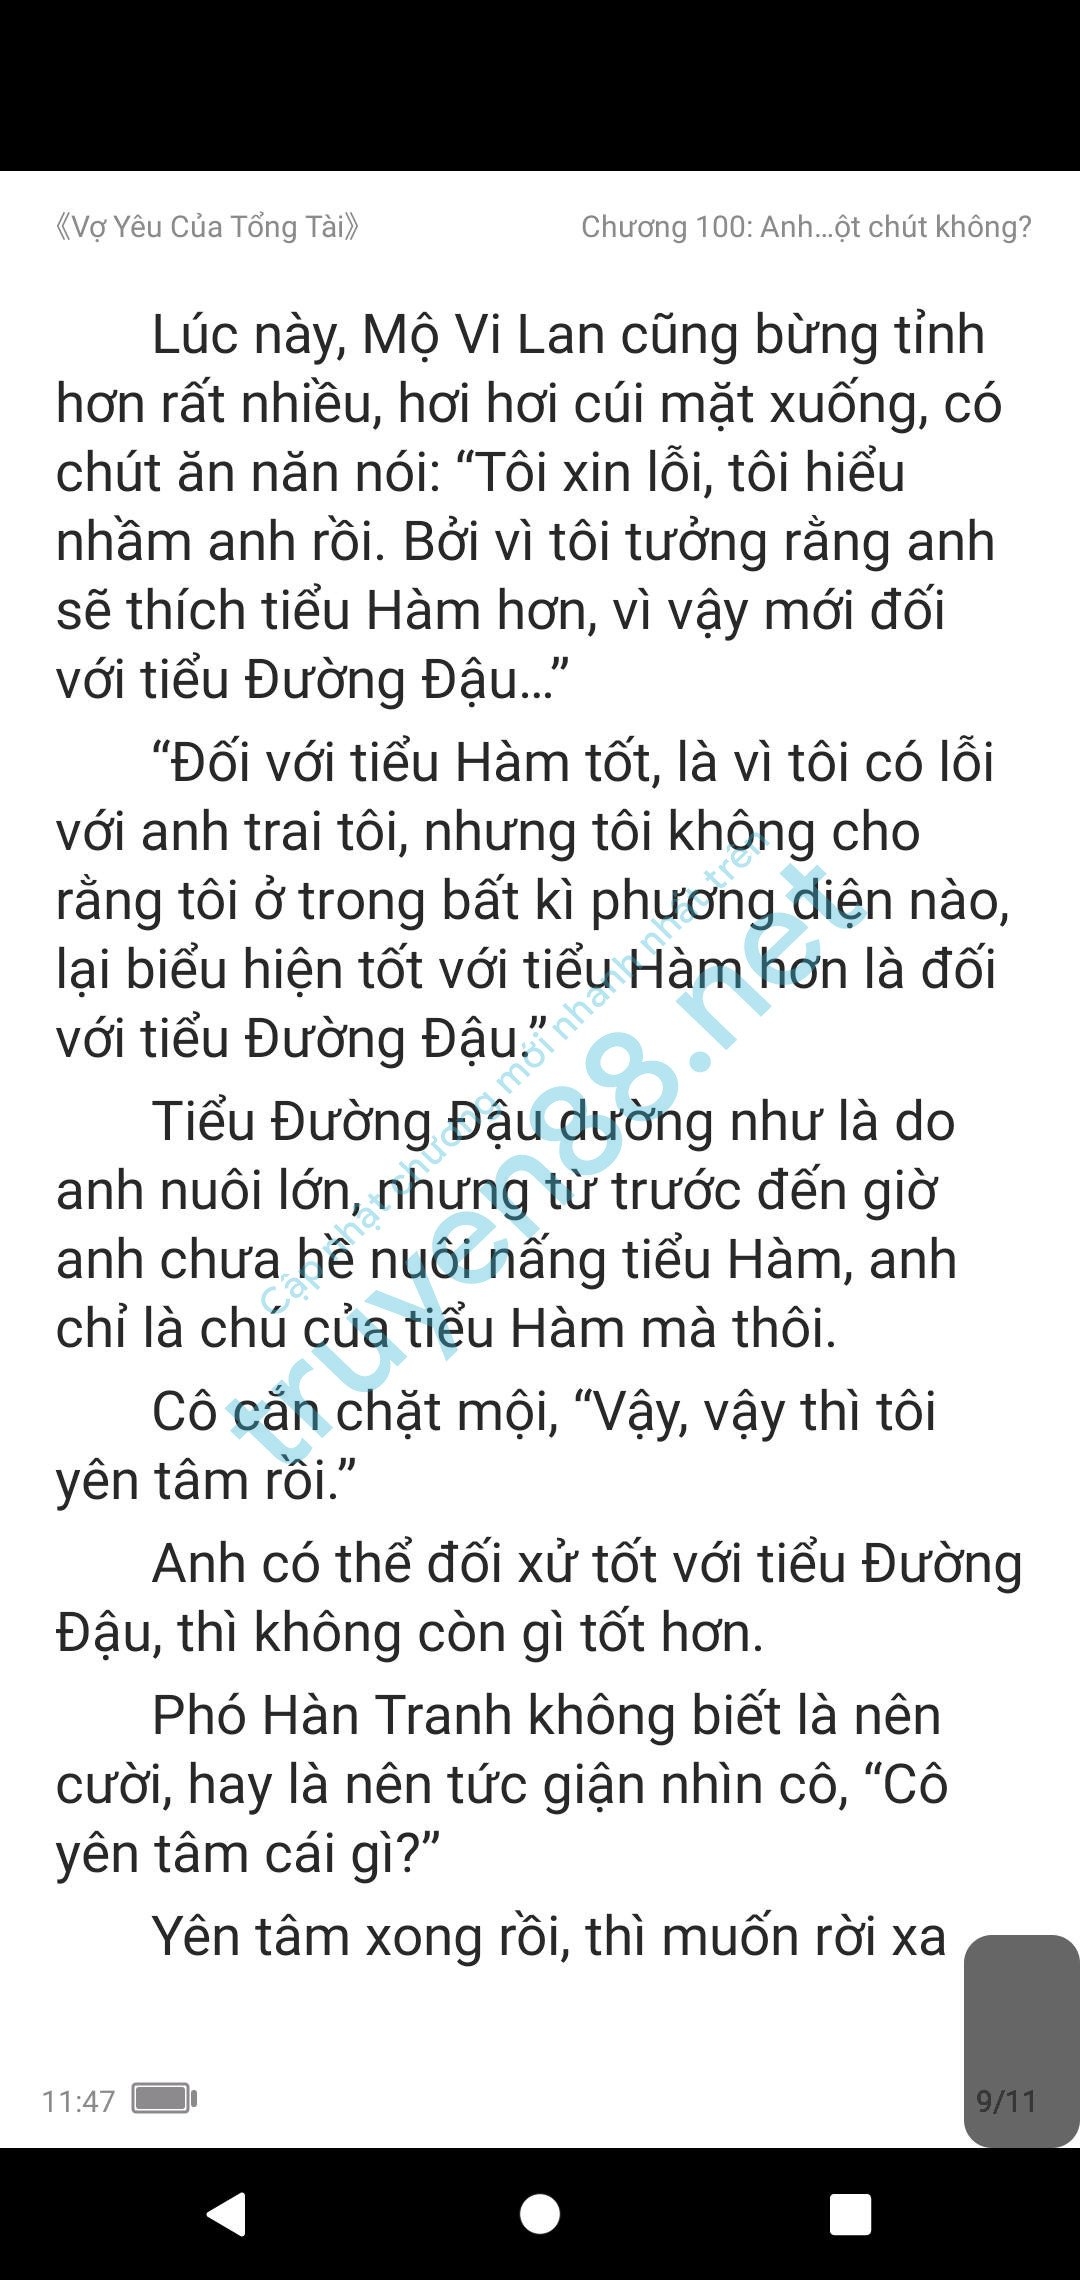 vo-yeu-cua-tong-tai-mo-vi-lan--pho-han-tranh-100-0